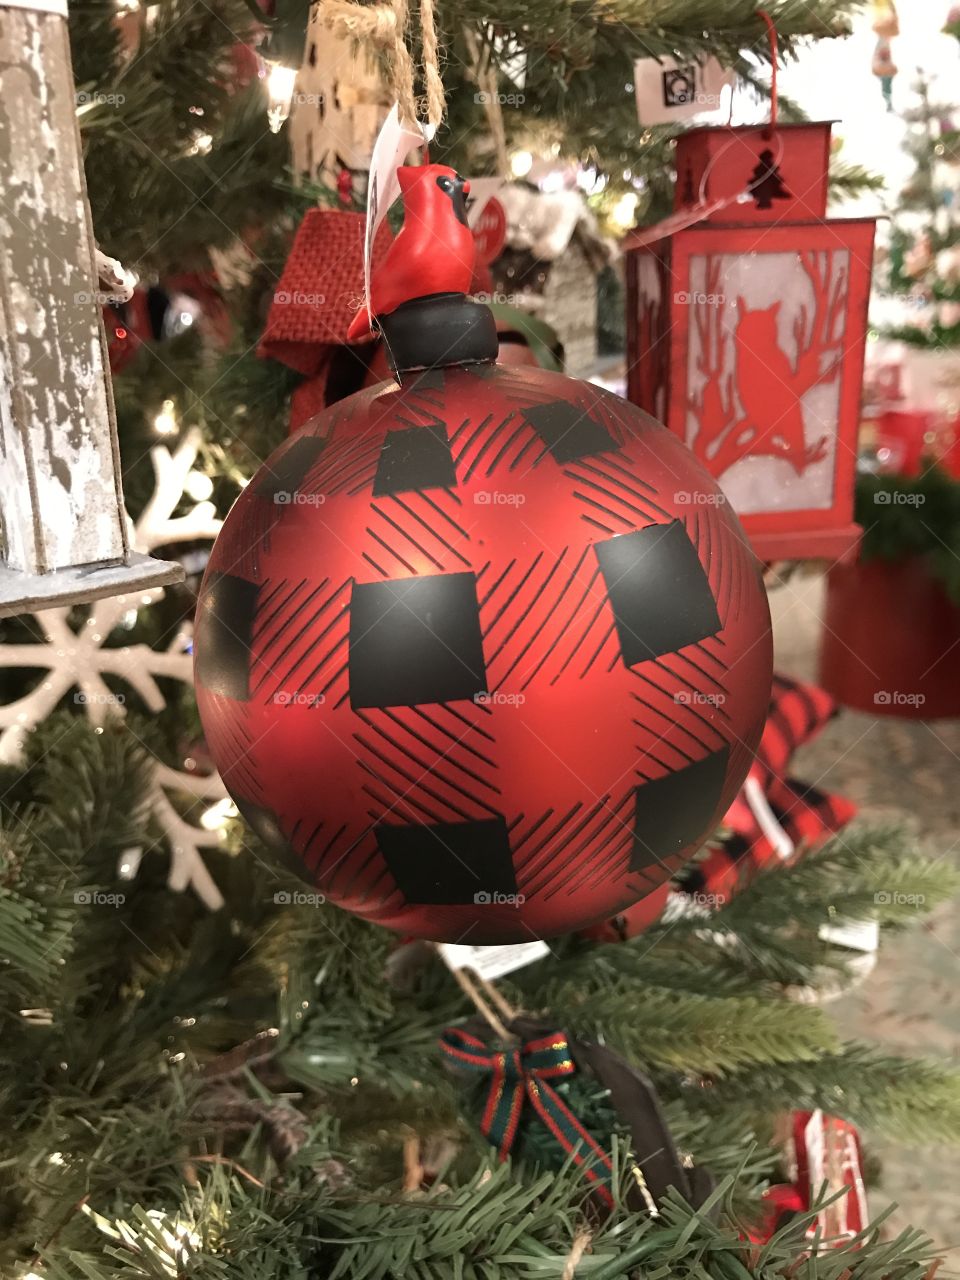 Christmas Tree ornament